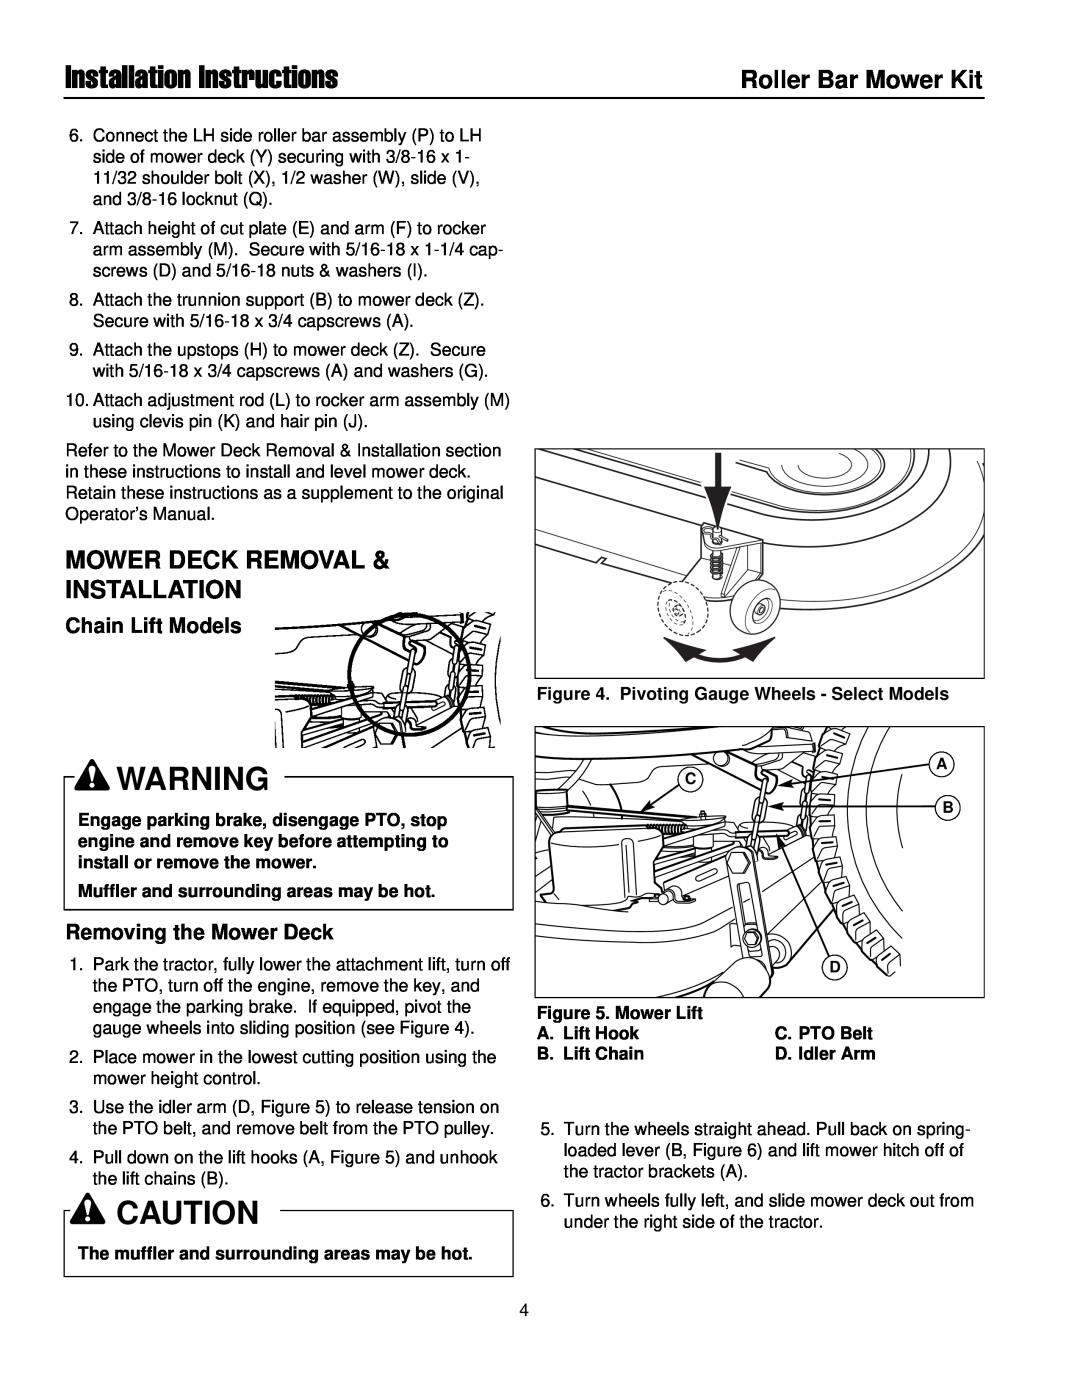 Briggs & Stratton 1687079 Installation Instructions, Mower Deck Removal Installation, Chain Lift Models 